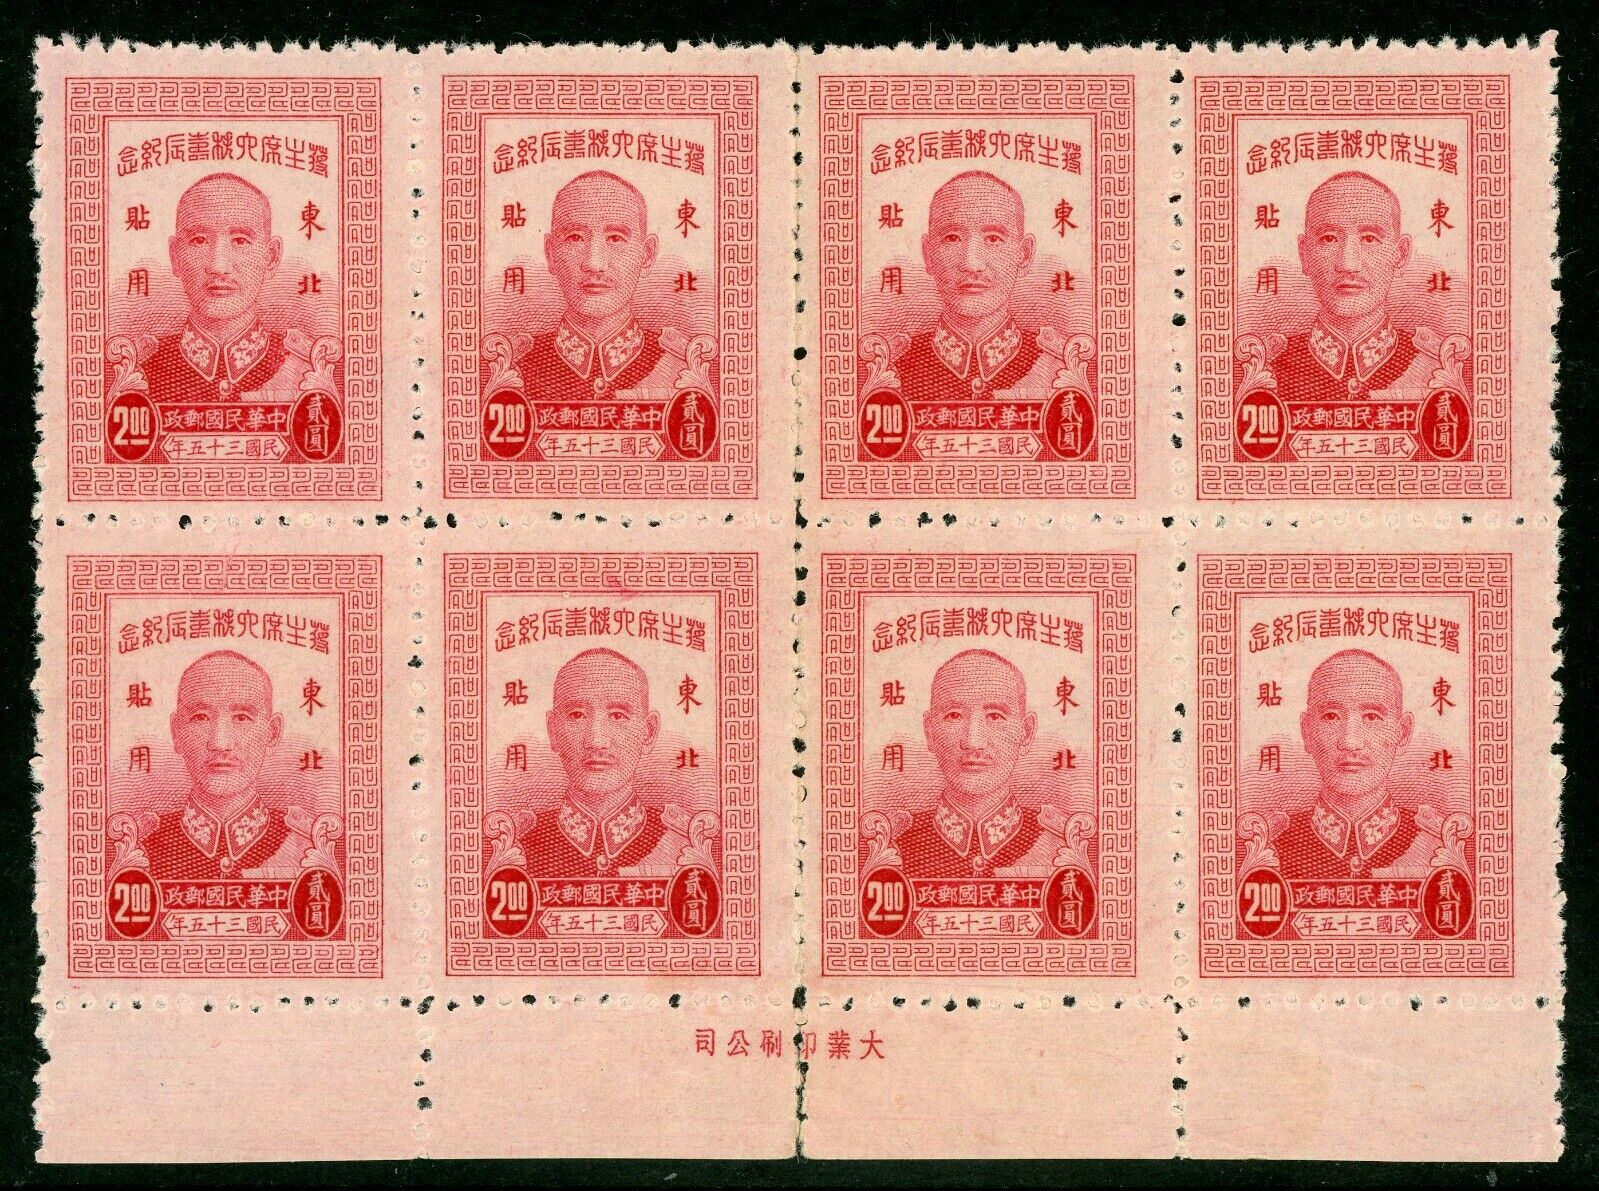 China 1947 Northeast $2.00 CKS Inscription Block of 6 Perf 11 CSS # 36 MNH A373